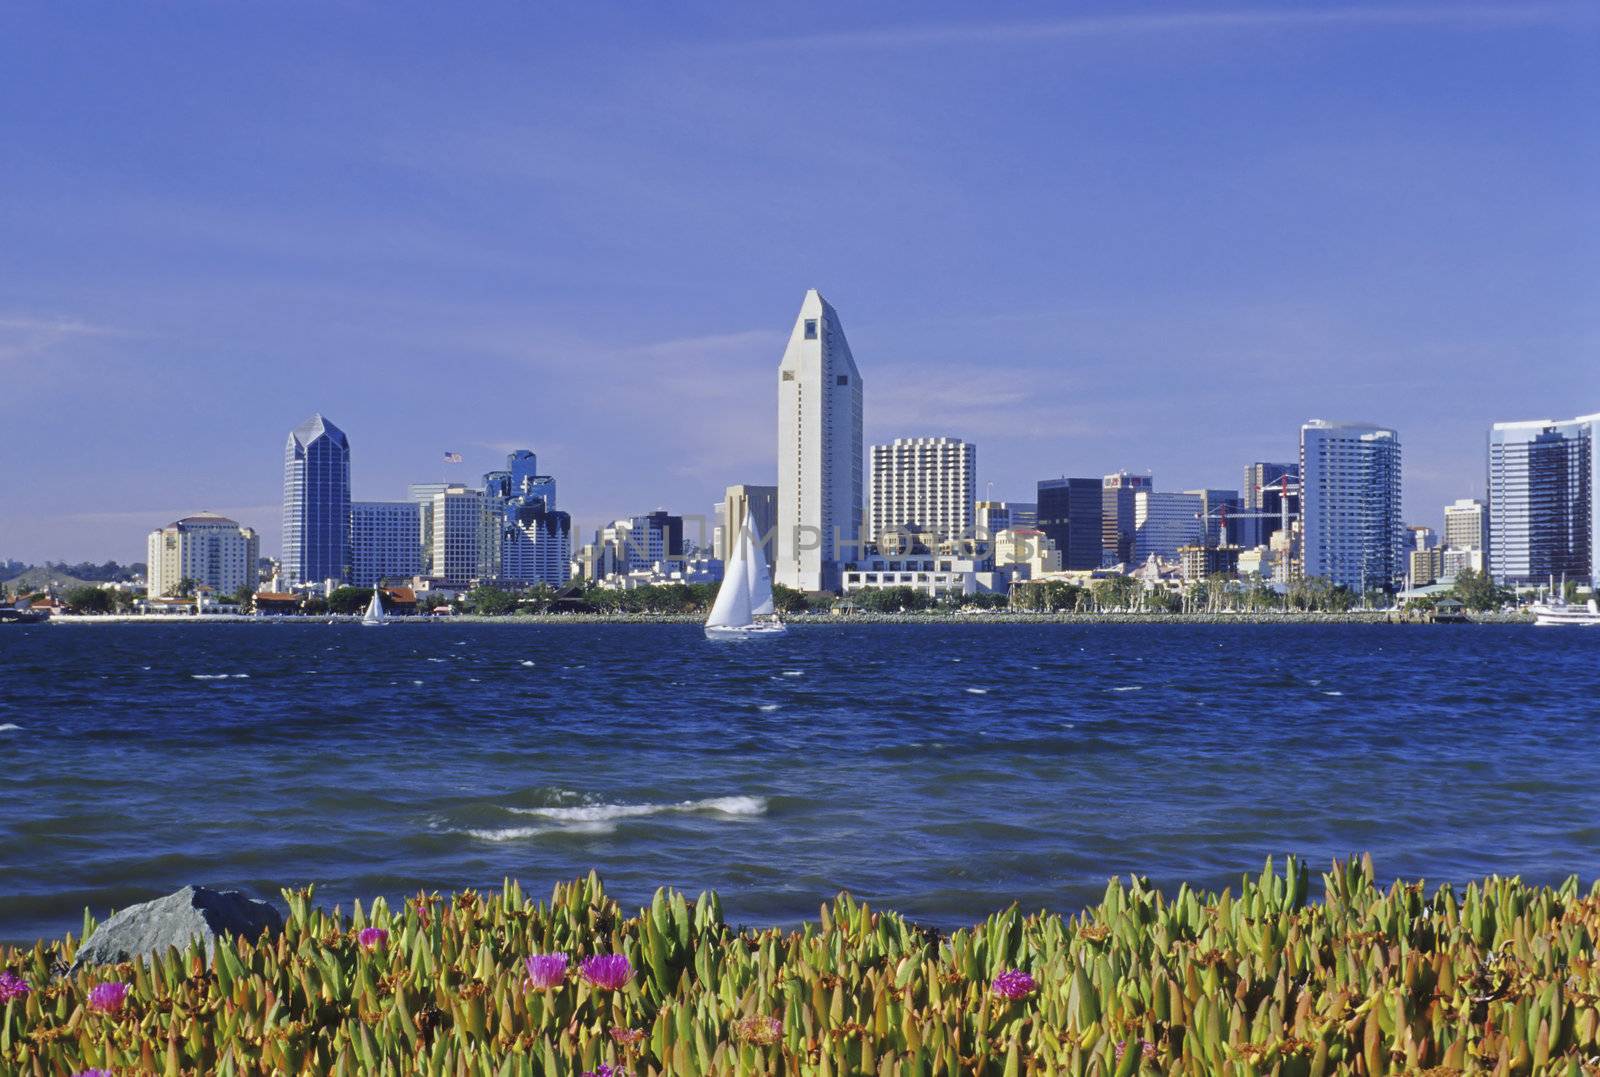 View of the San Diego skyline as seen from Coronado Island.